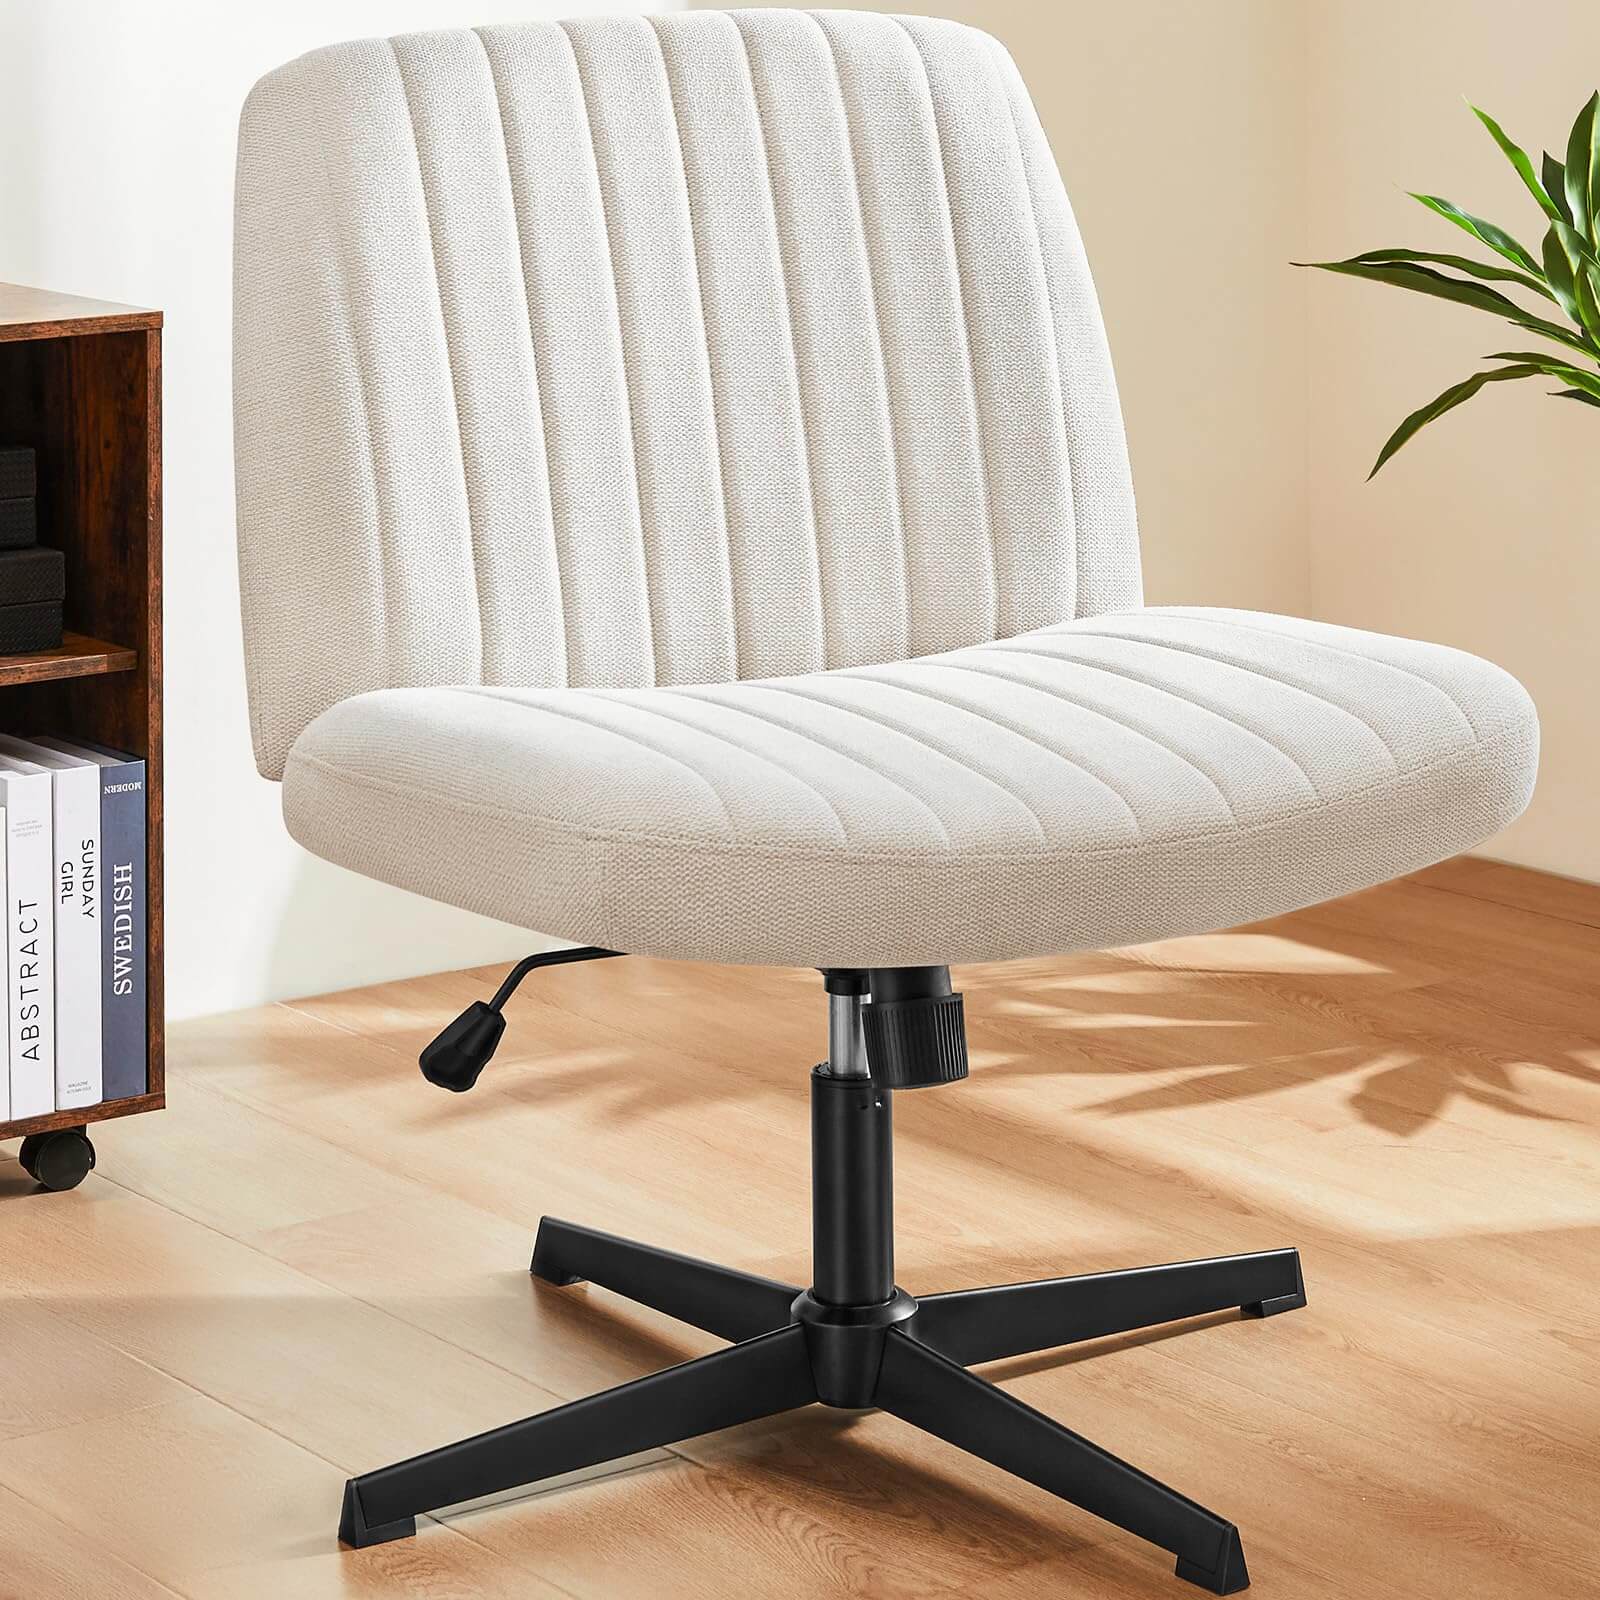 SWEETCRISPY Cross-Legged Chair,No Wheels Armless Swivel Home Office Ch